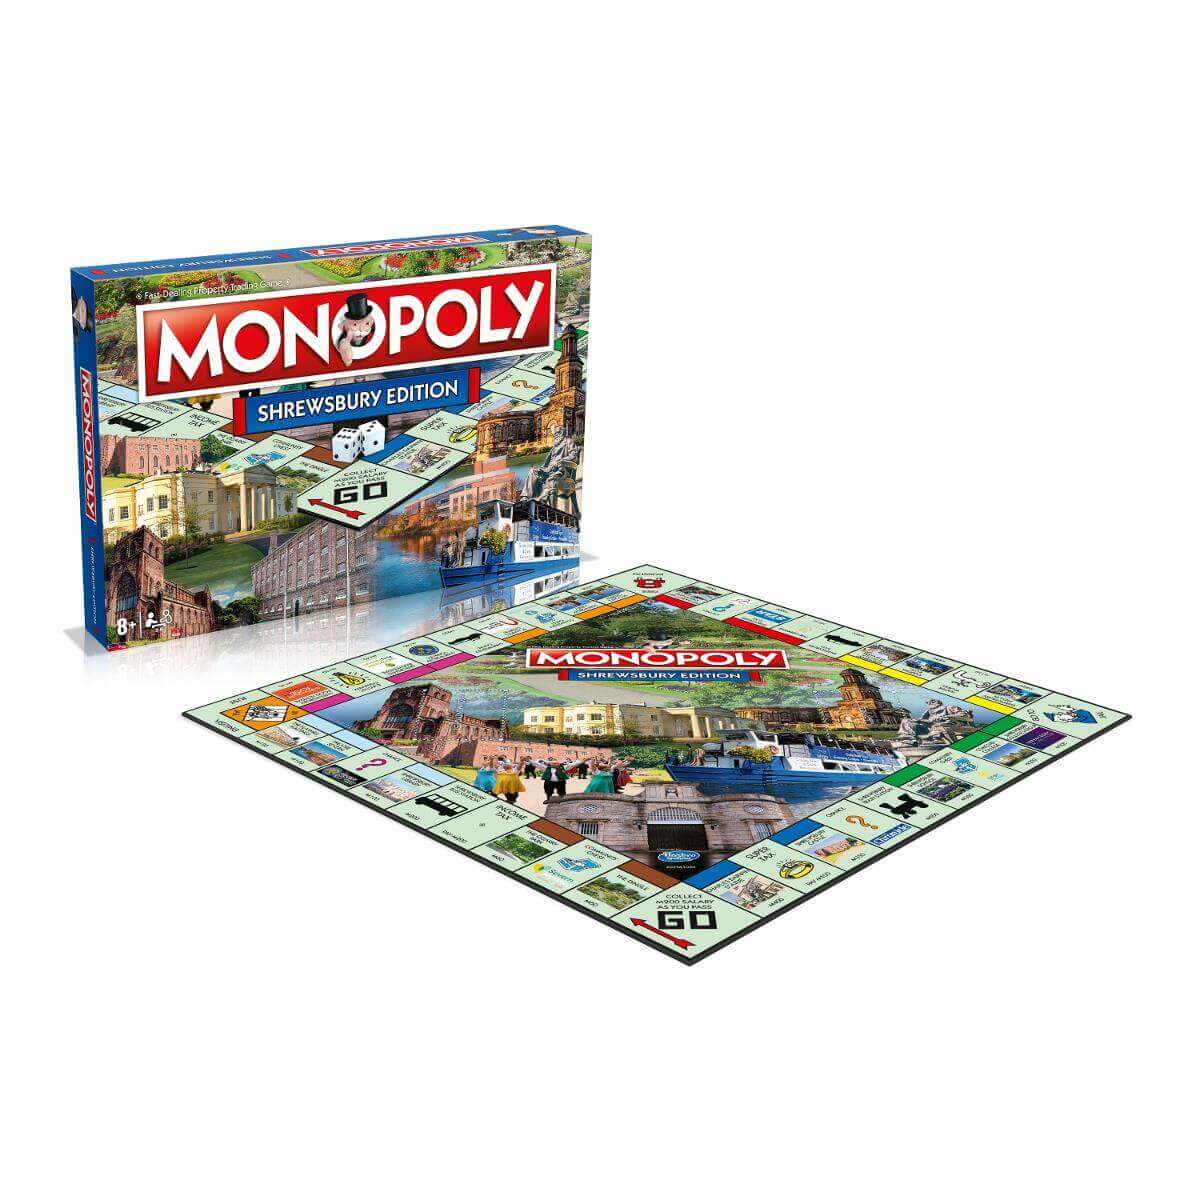 Shrewsbury Monopoly Board Game